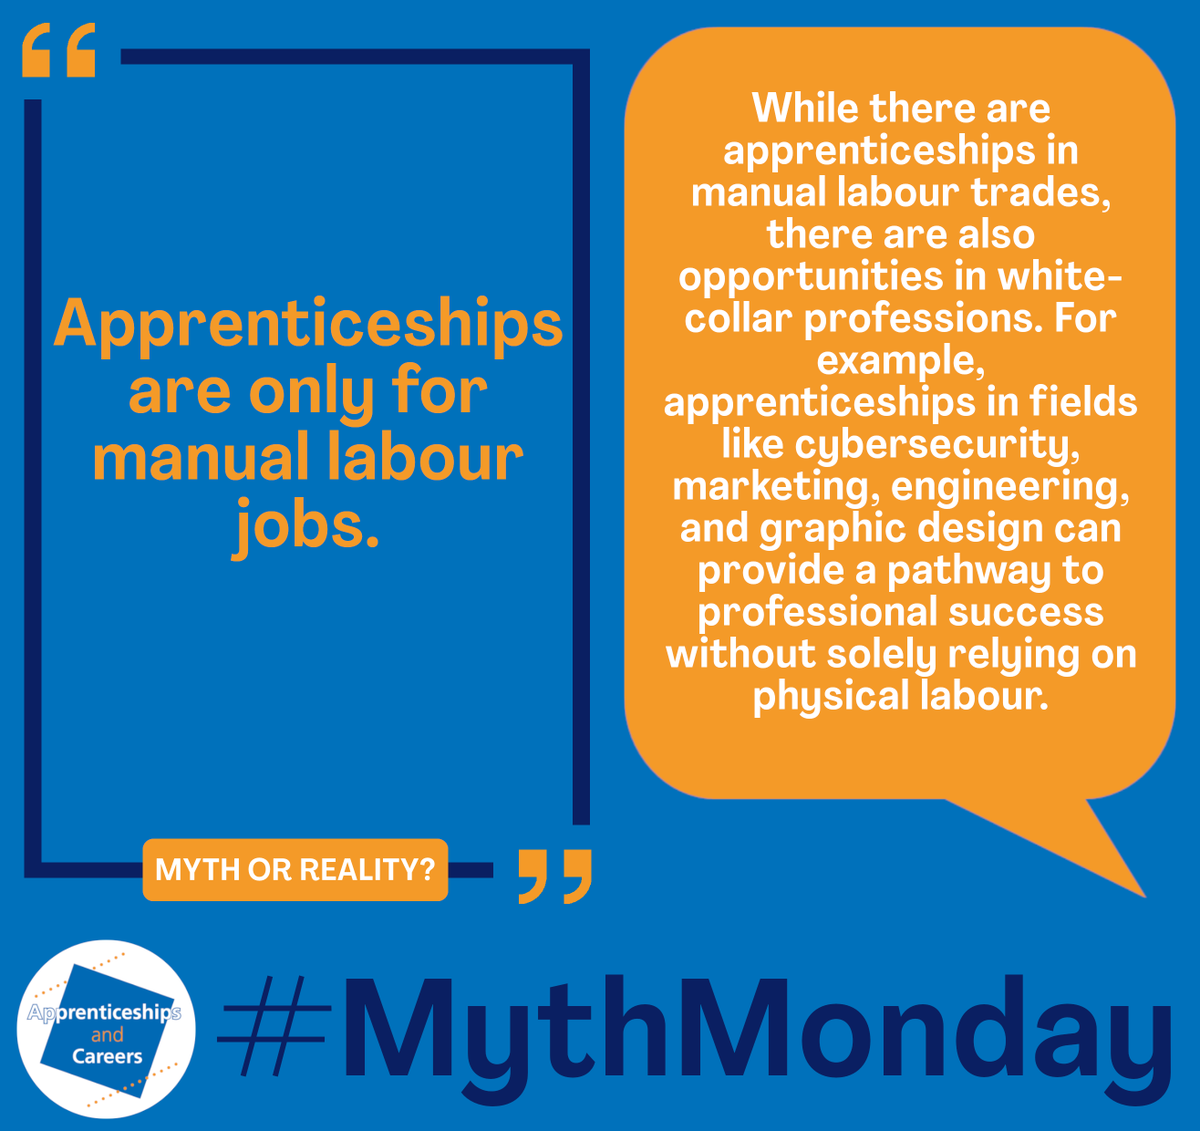 #MythMonday

Some further #mythbusting regarding #apprenticeships.

#CareersDay #CareersFamily #SkillsforLife #StepintotheNHS